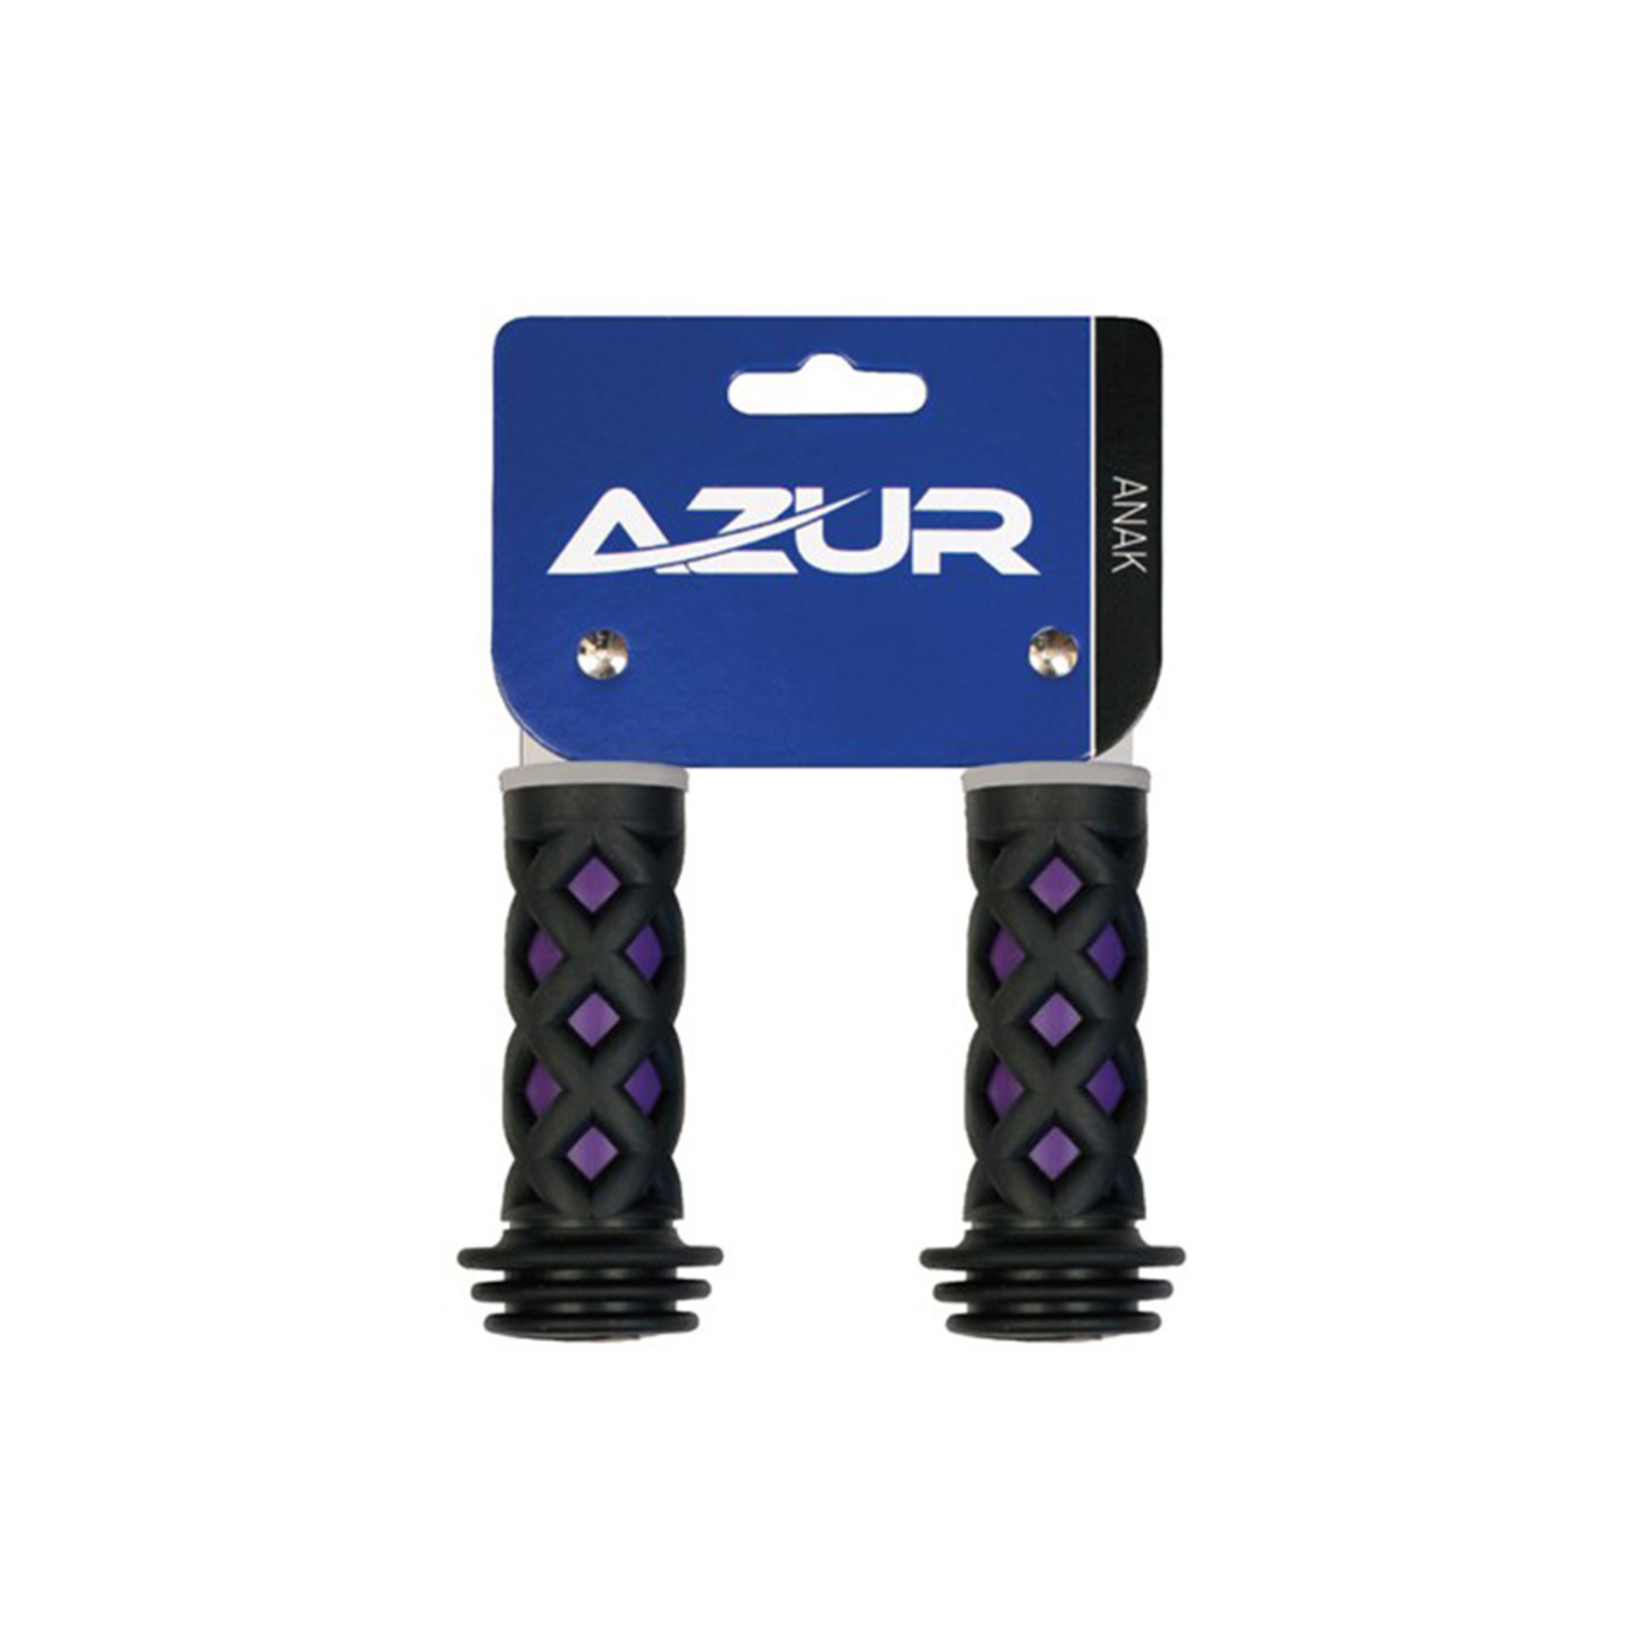 Azur Azur Bike/Cycling Handlebar Grip - Anak Grip - 85mm - Black/Purple